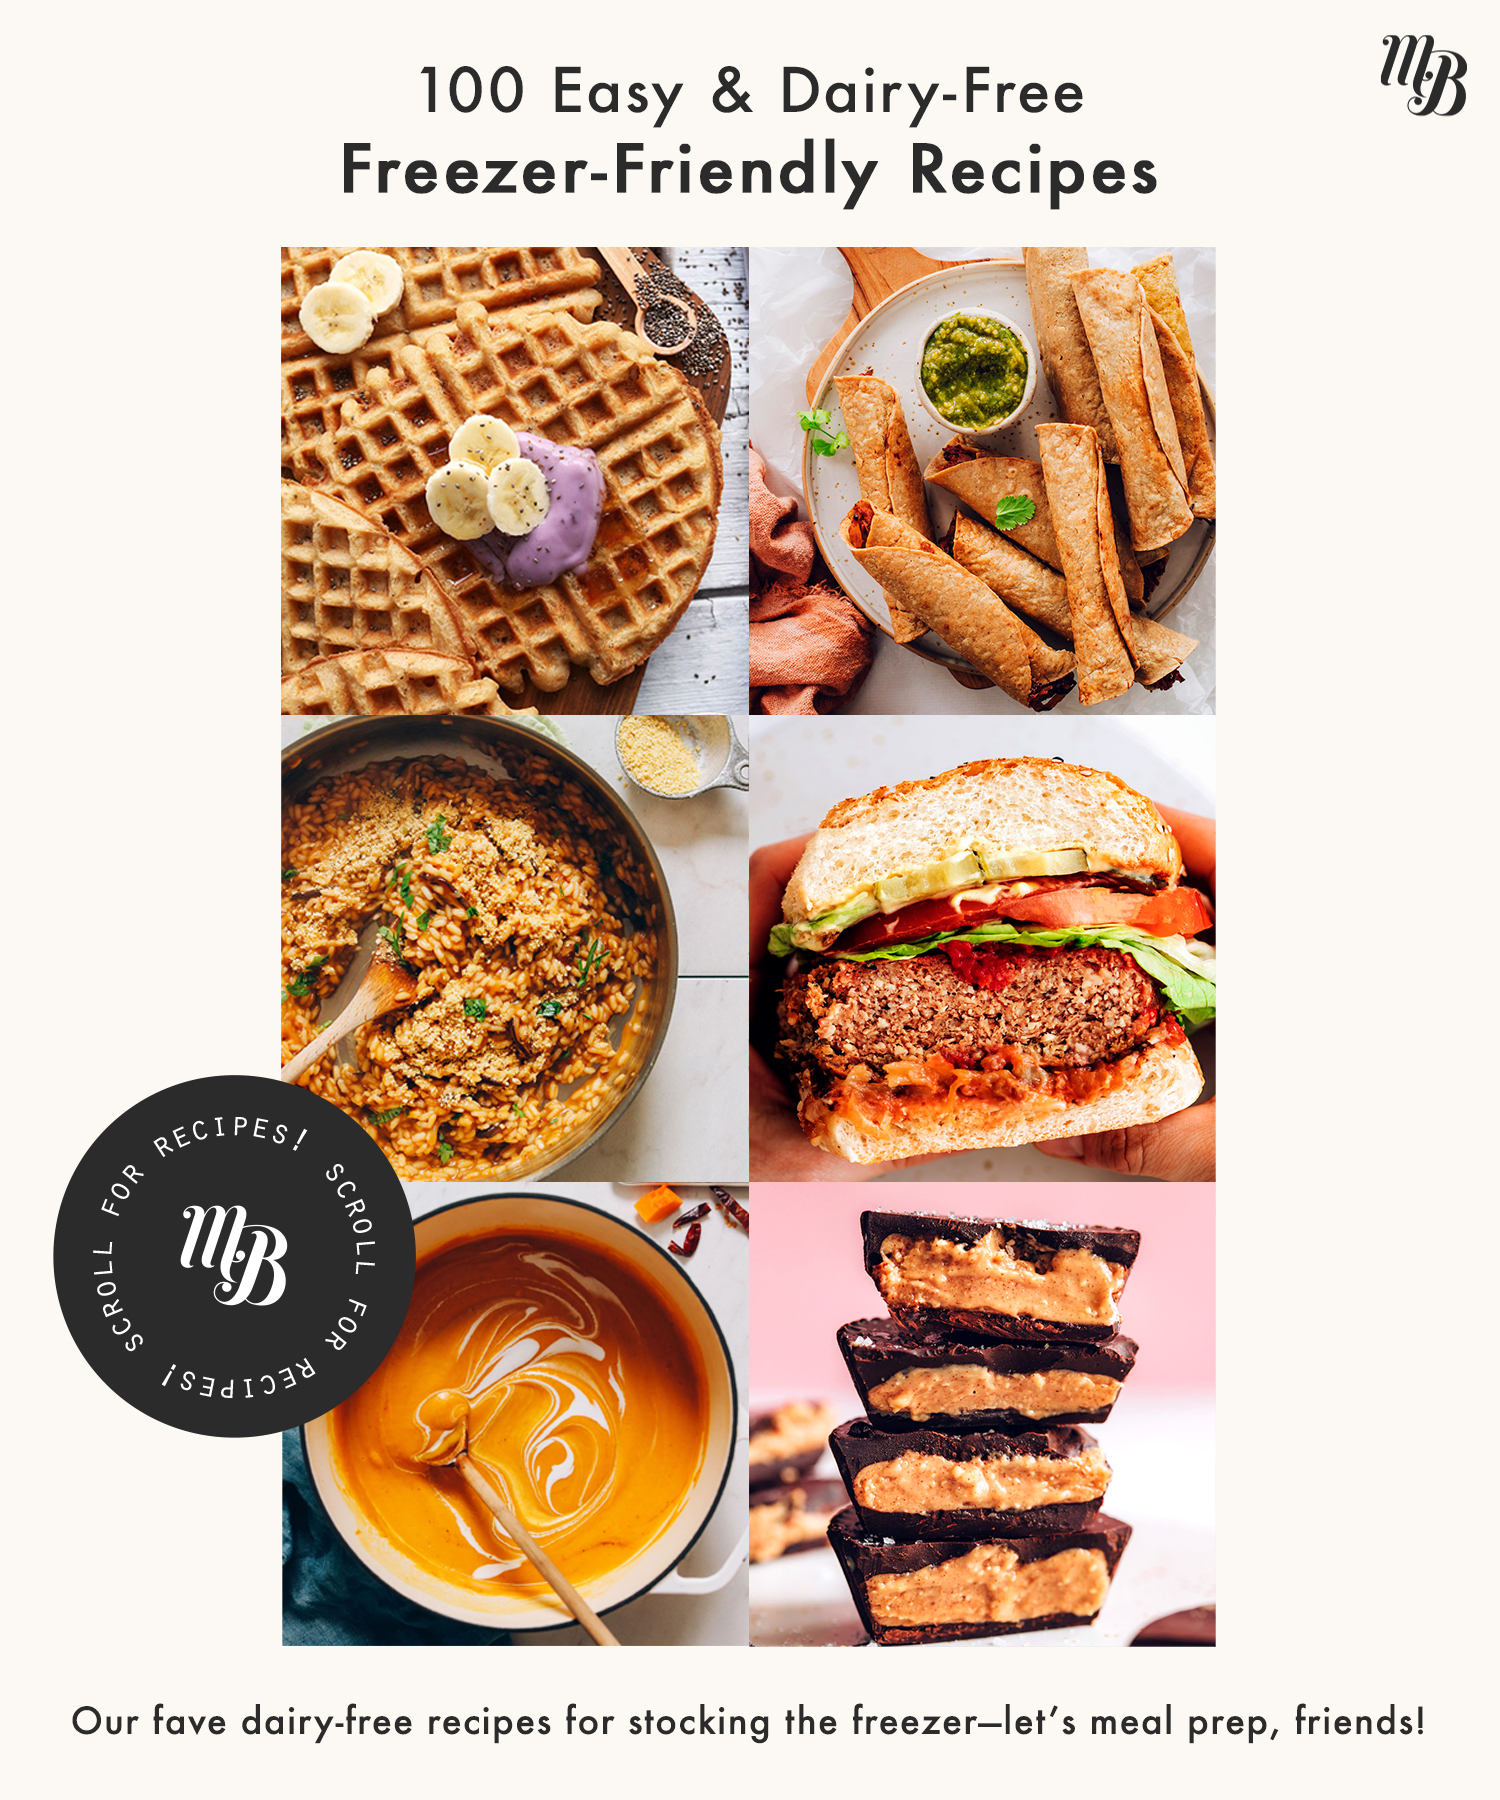 Assortment of easy freezer-friendly recipes